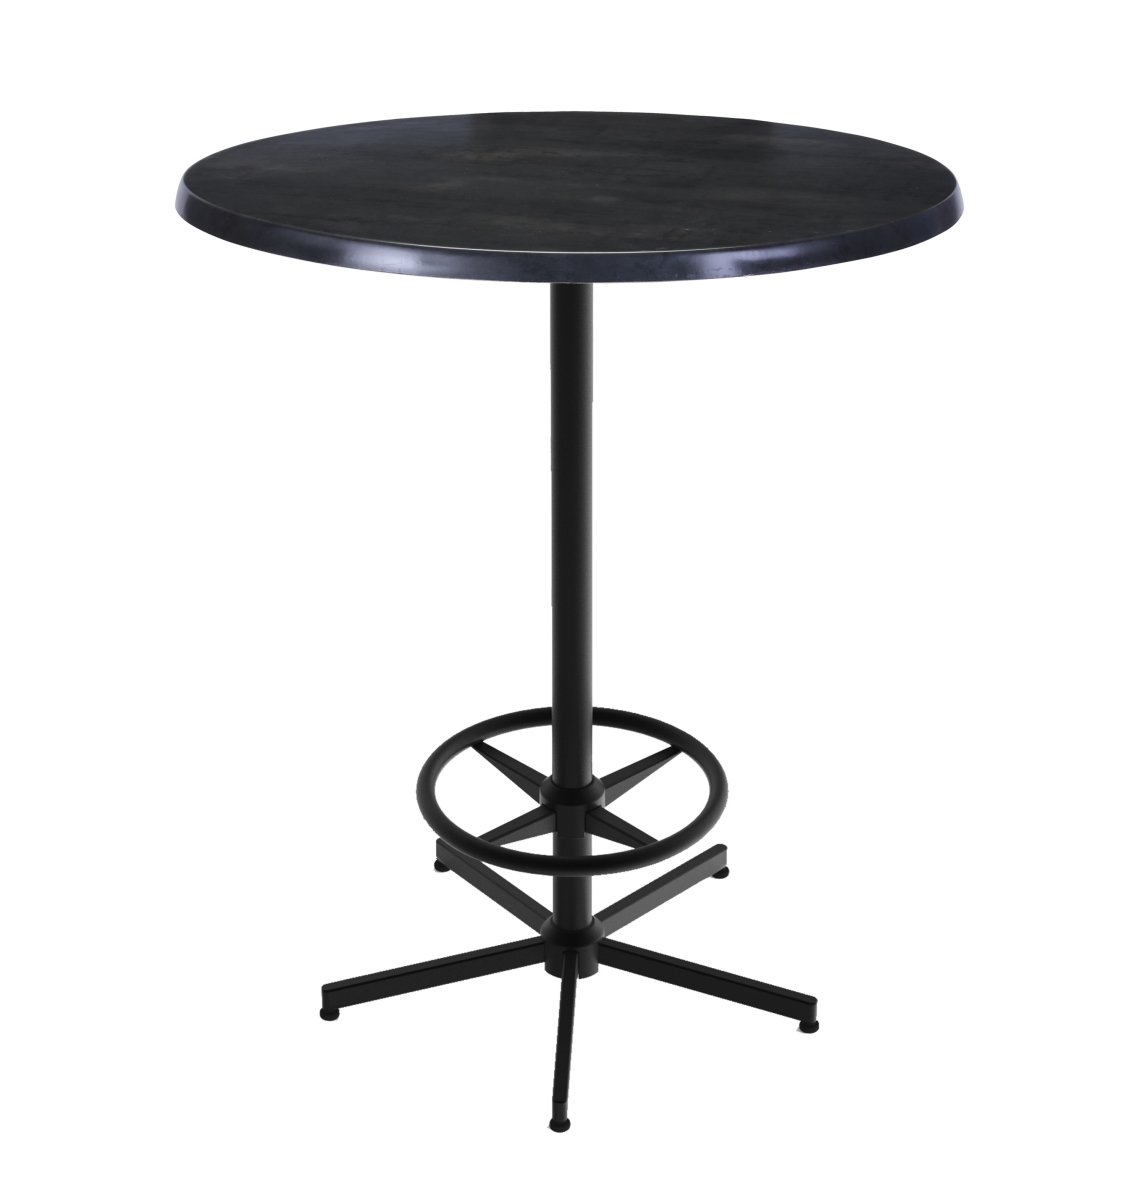 Od21642bwod30rblkstl 42 In. Black Table With 30 In. Diameter Indoor & Outdoor Black Steel Round Top